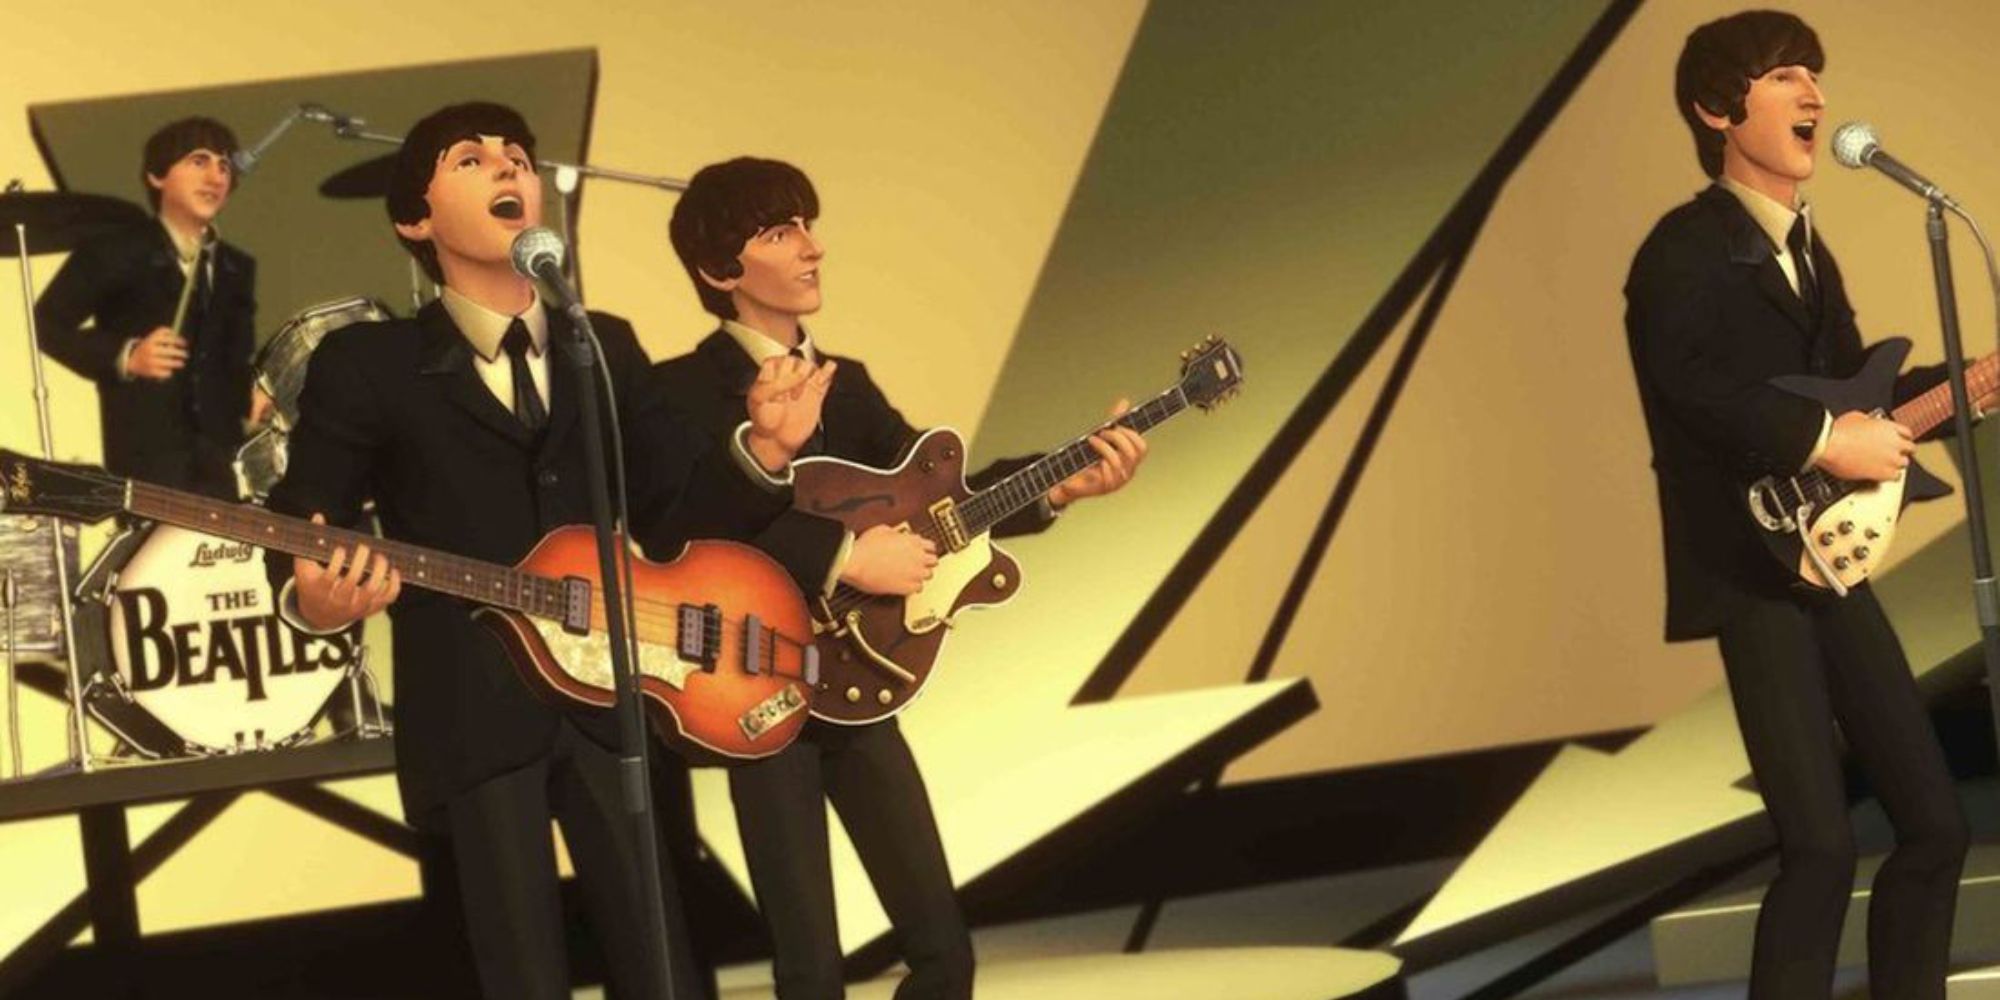 Beatles Rock Band